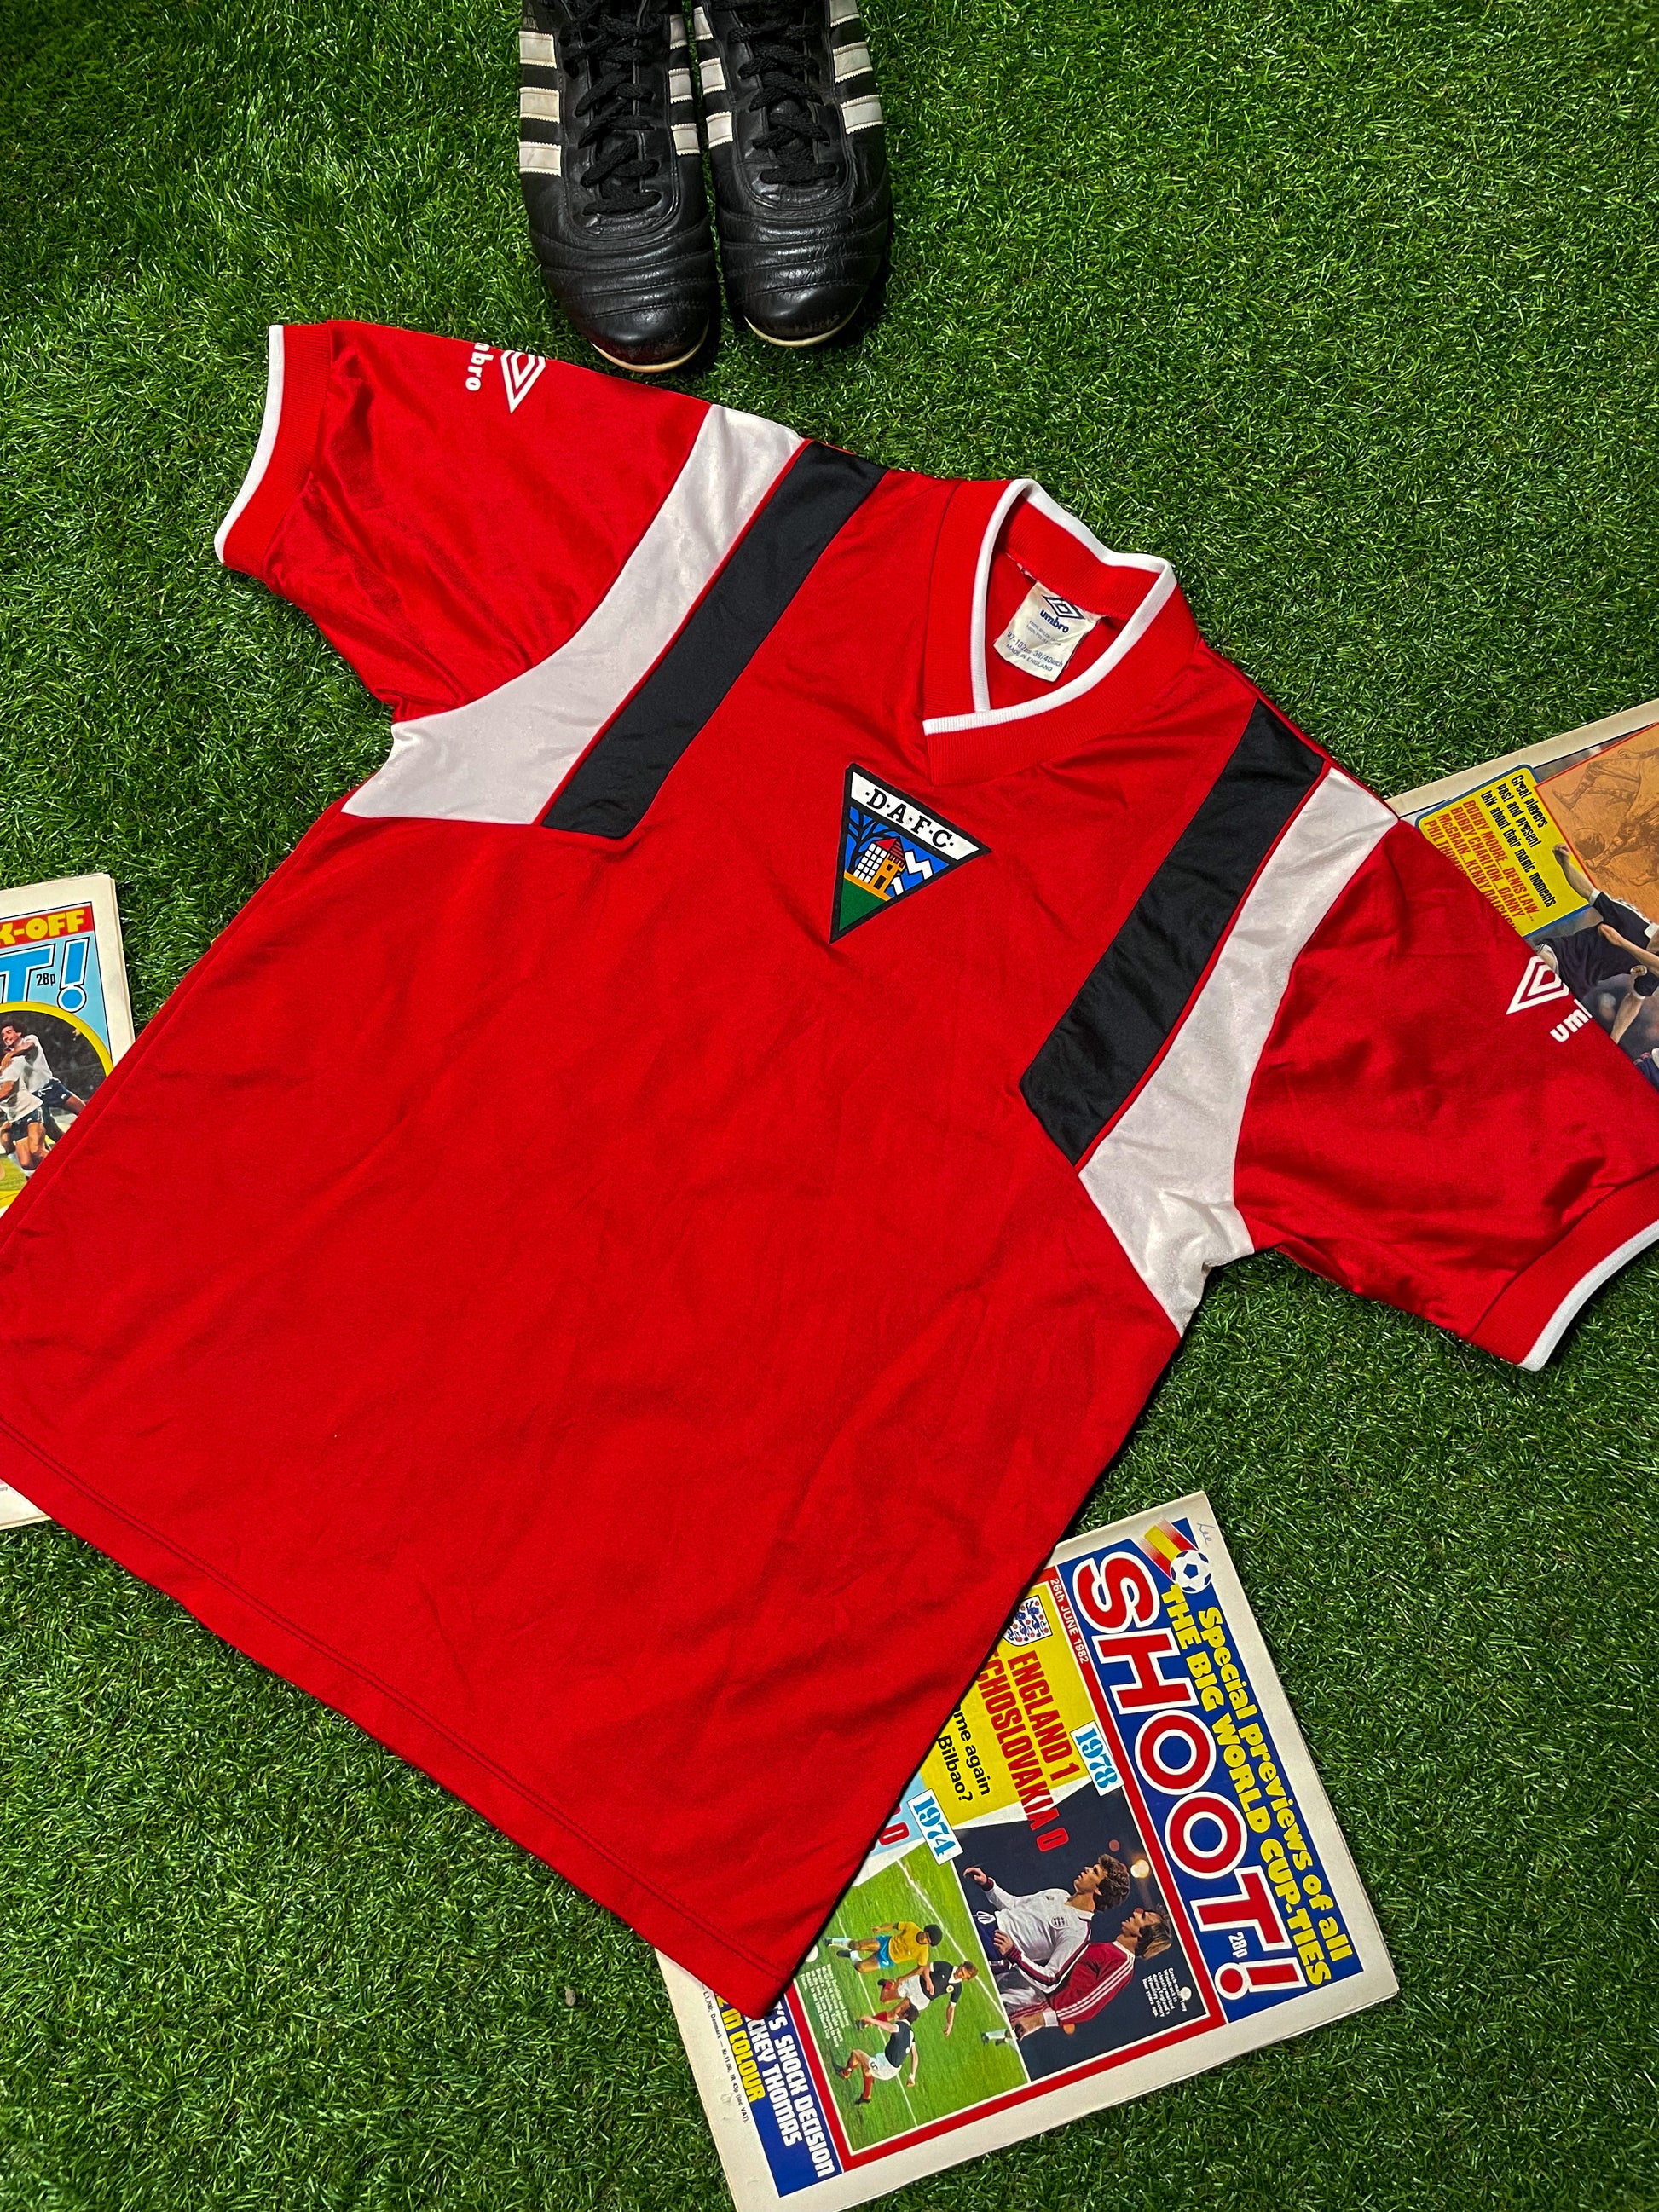 Mundial Style - The Nostalgic Old School Football Shop